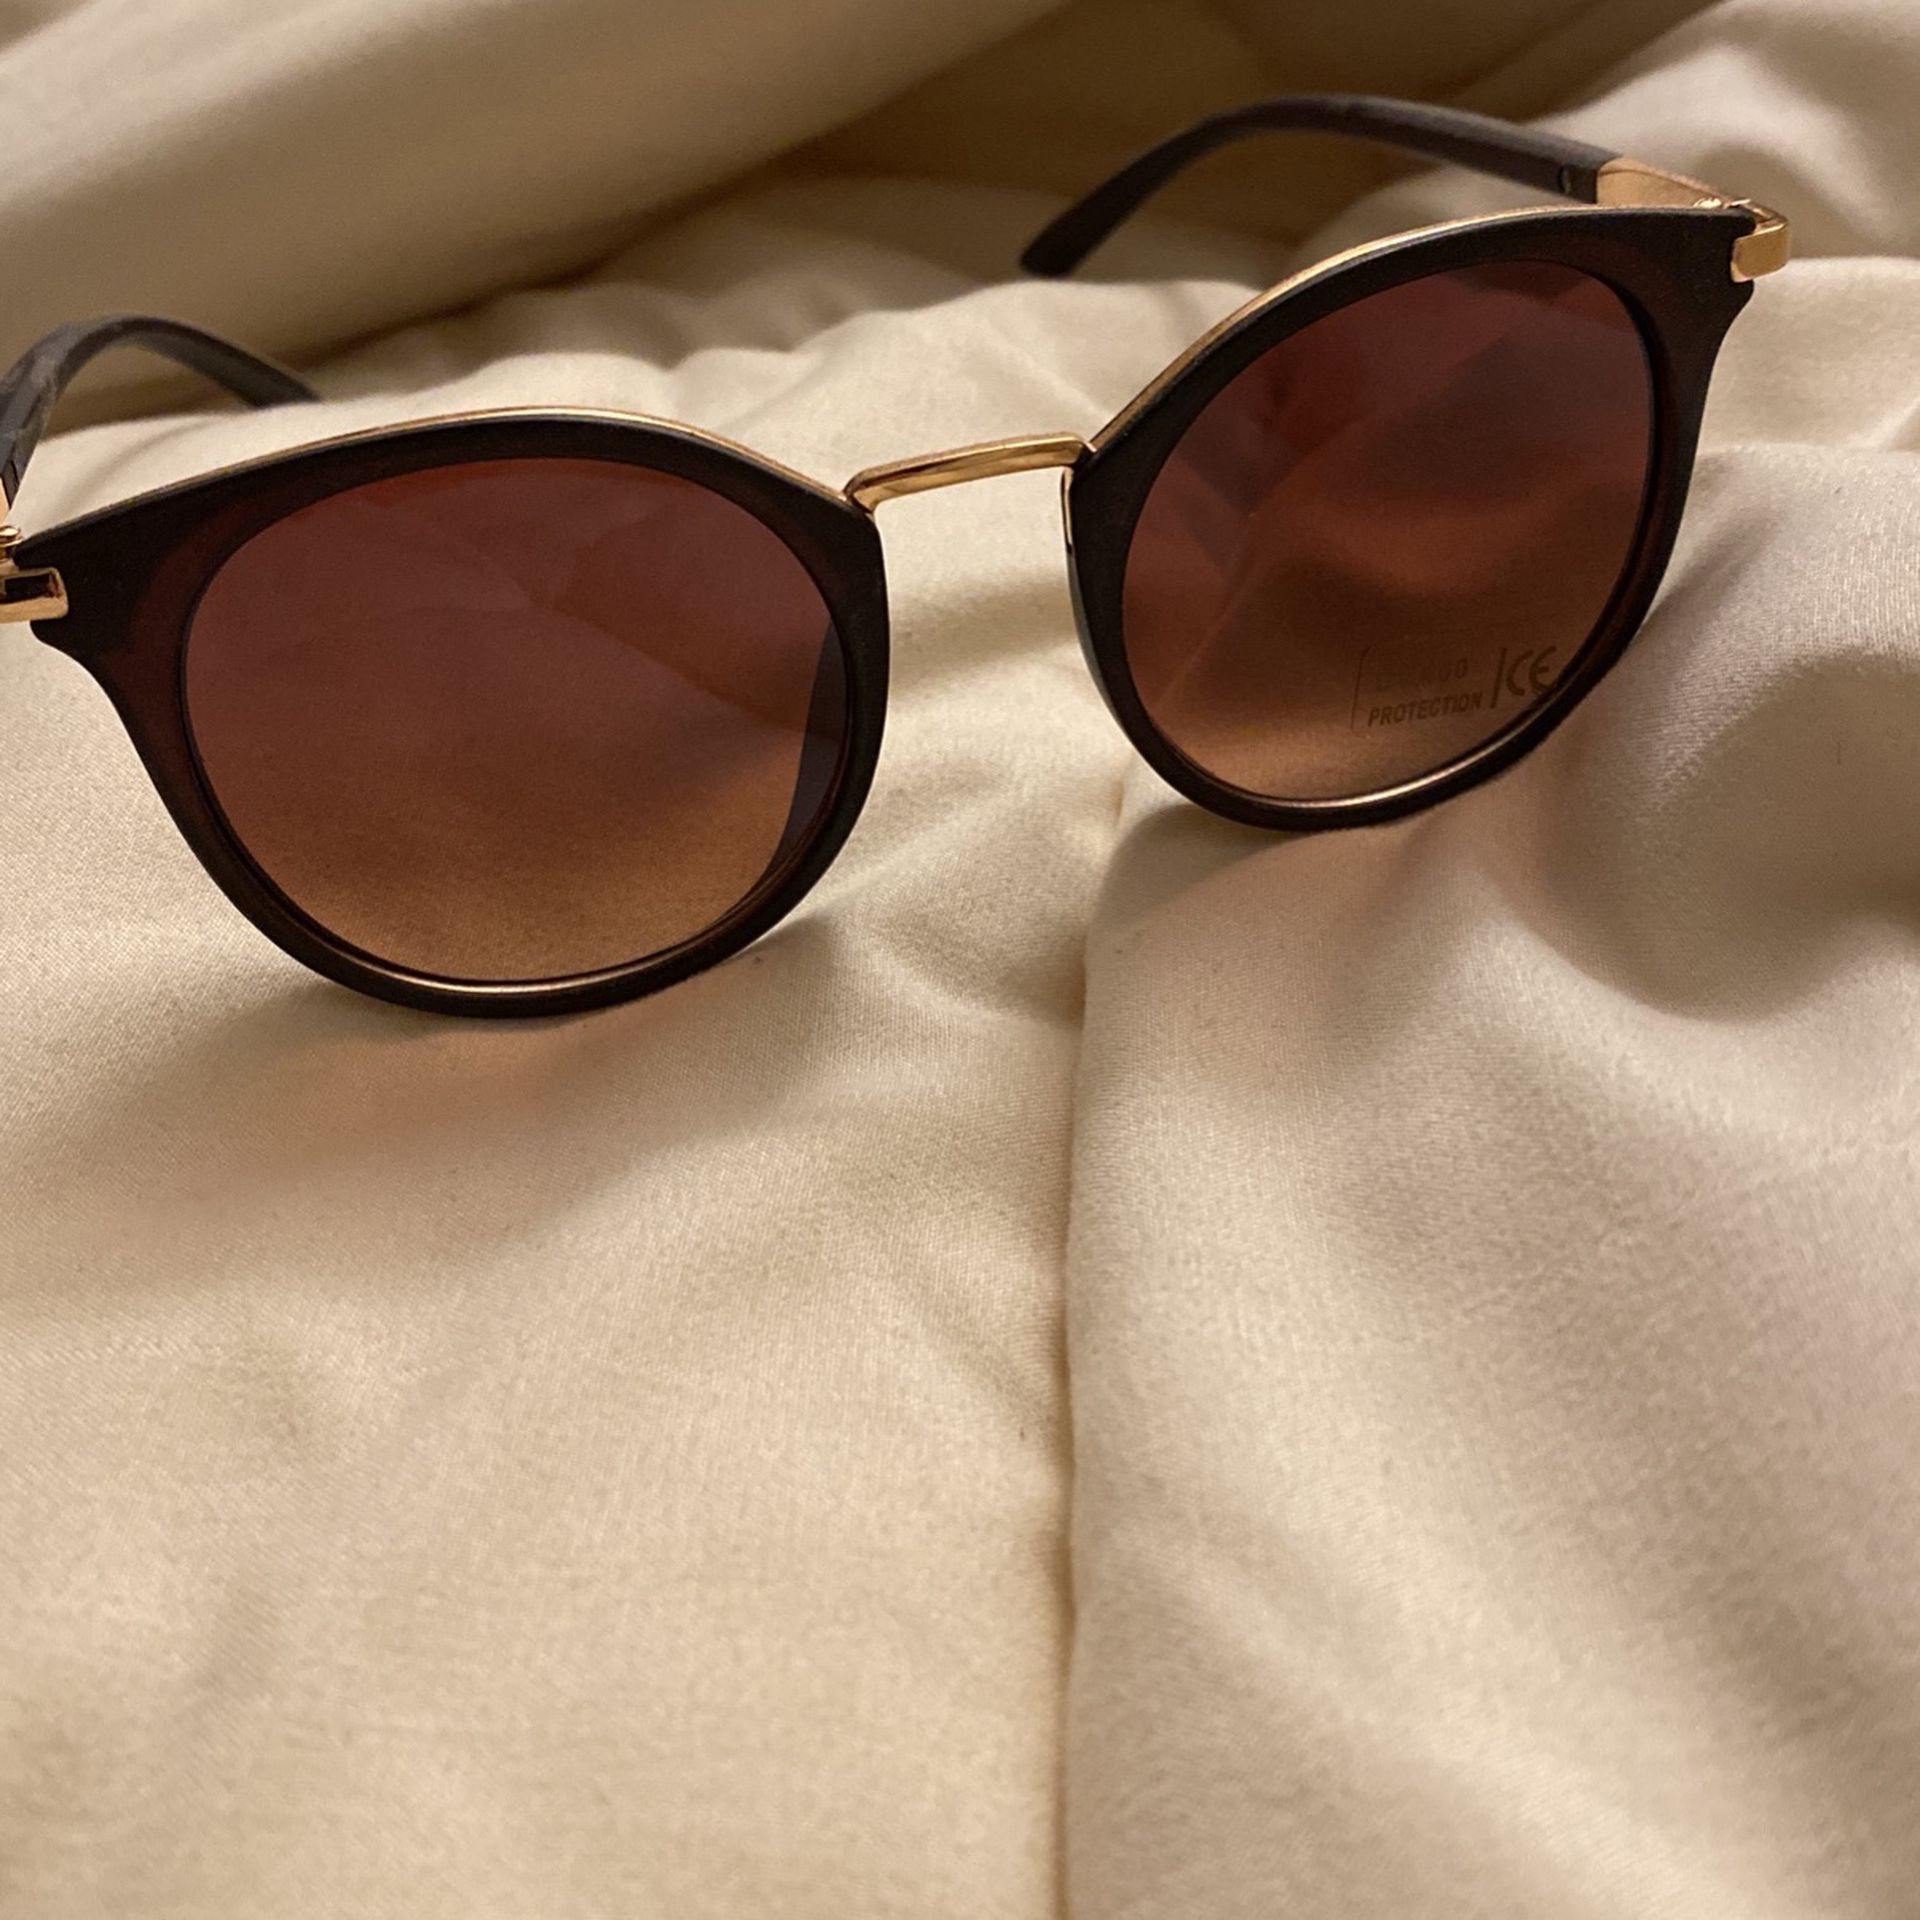 Brown/gold trim sunglasses